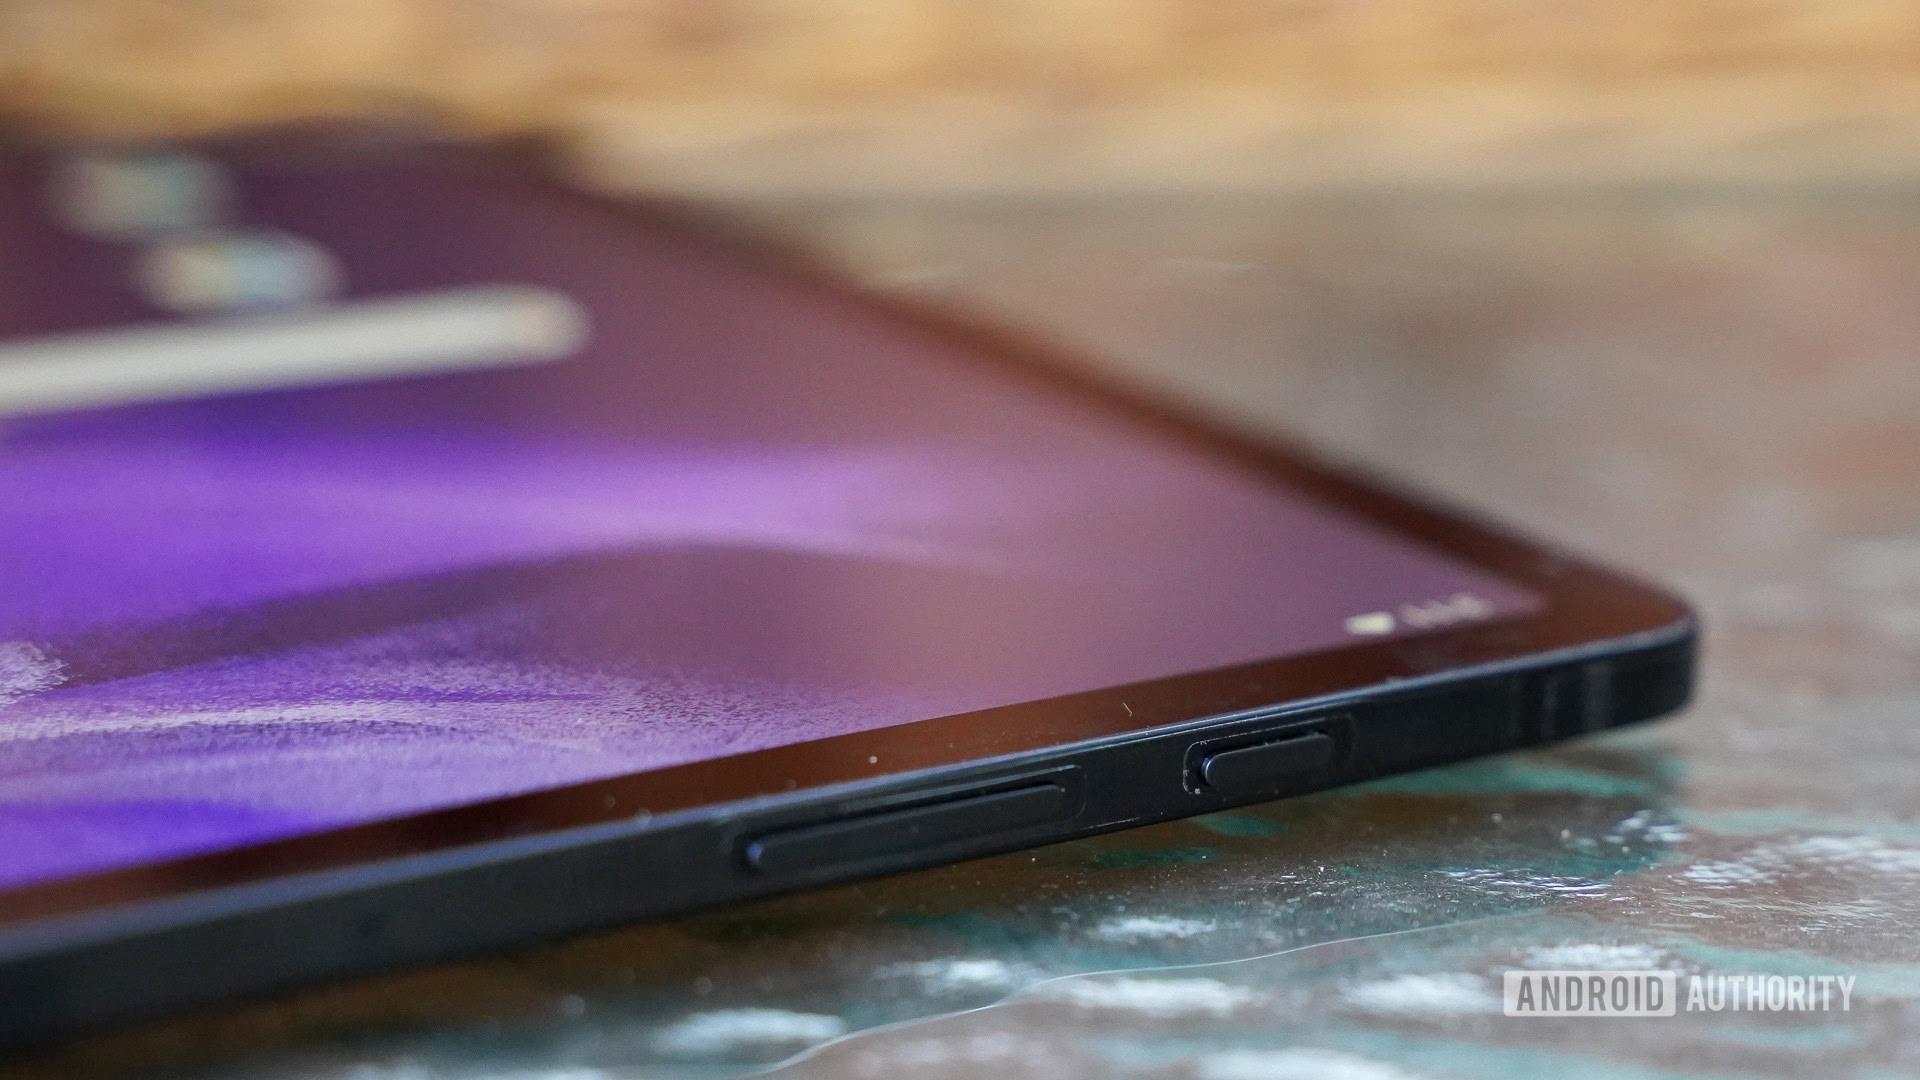 Samsung Galaxy Tab S7 FE Review